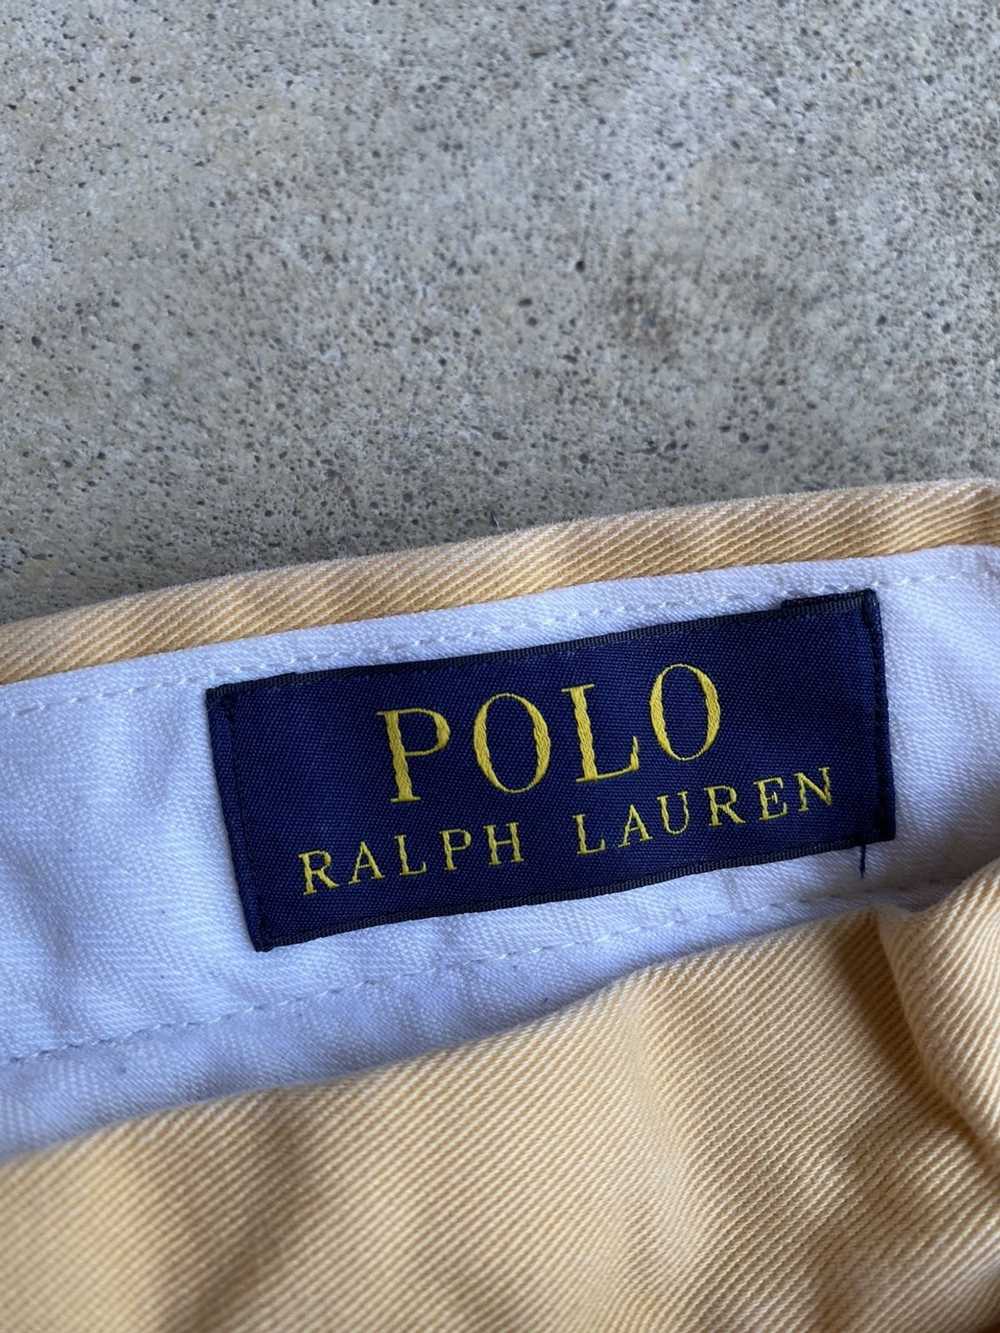 Polo Ralph Lauren Polo Ralph Lauren Pants - image 3